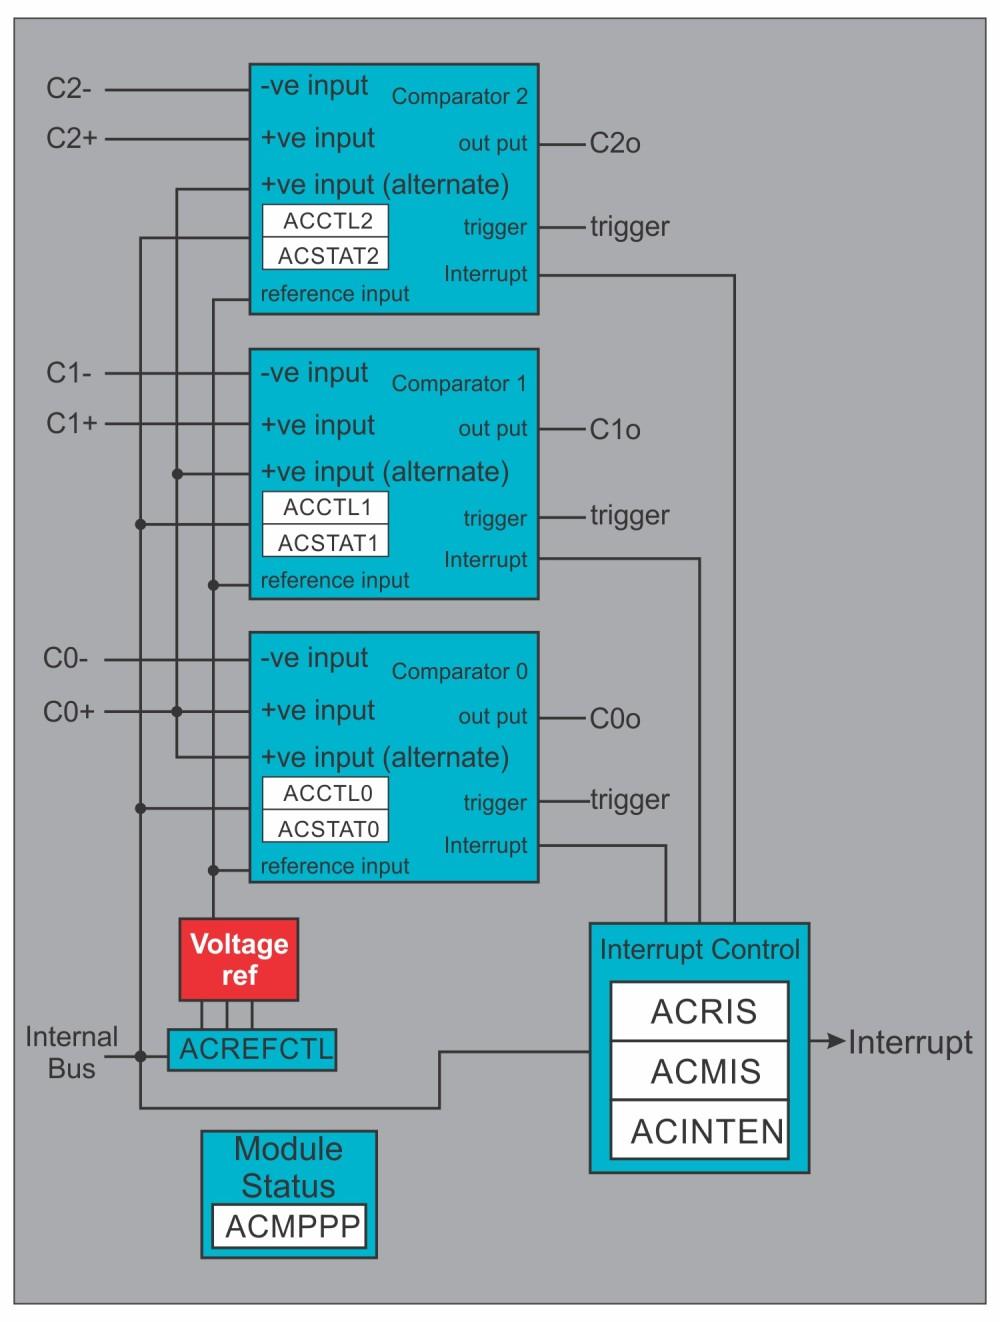 Analog Comparators 3.4.2 Analog Comparator Module Block Diagram Fig 3.10.